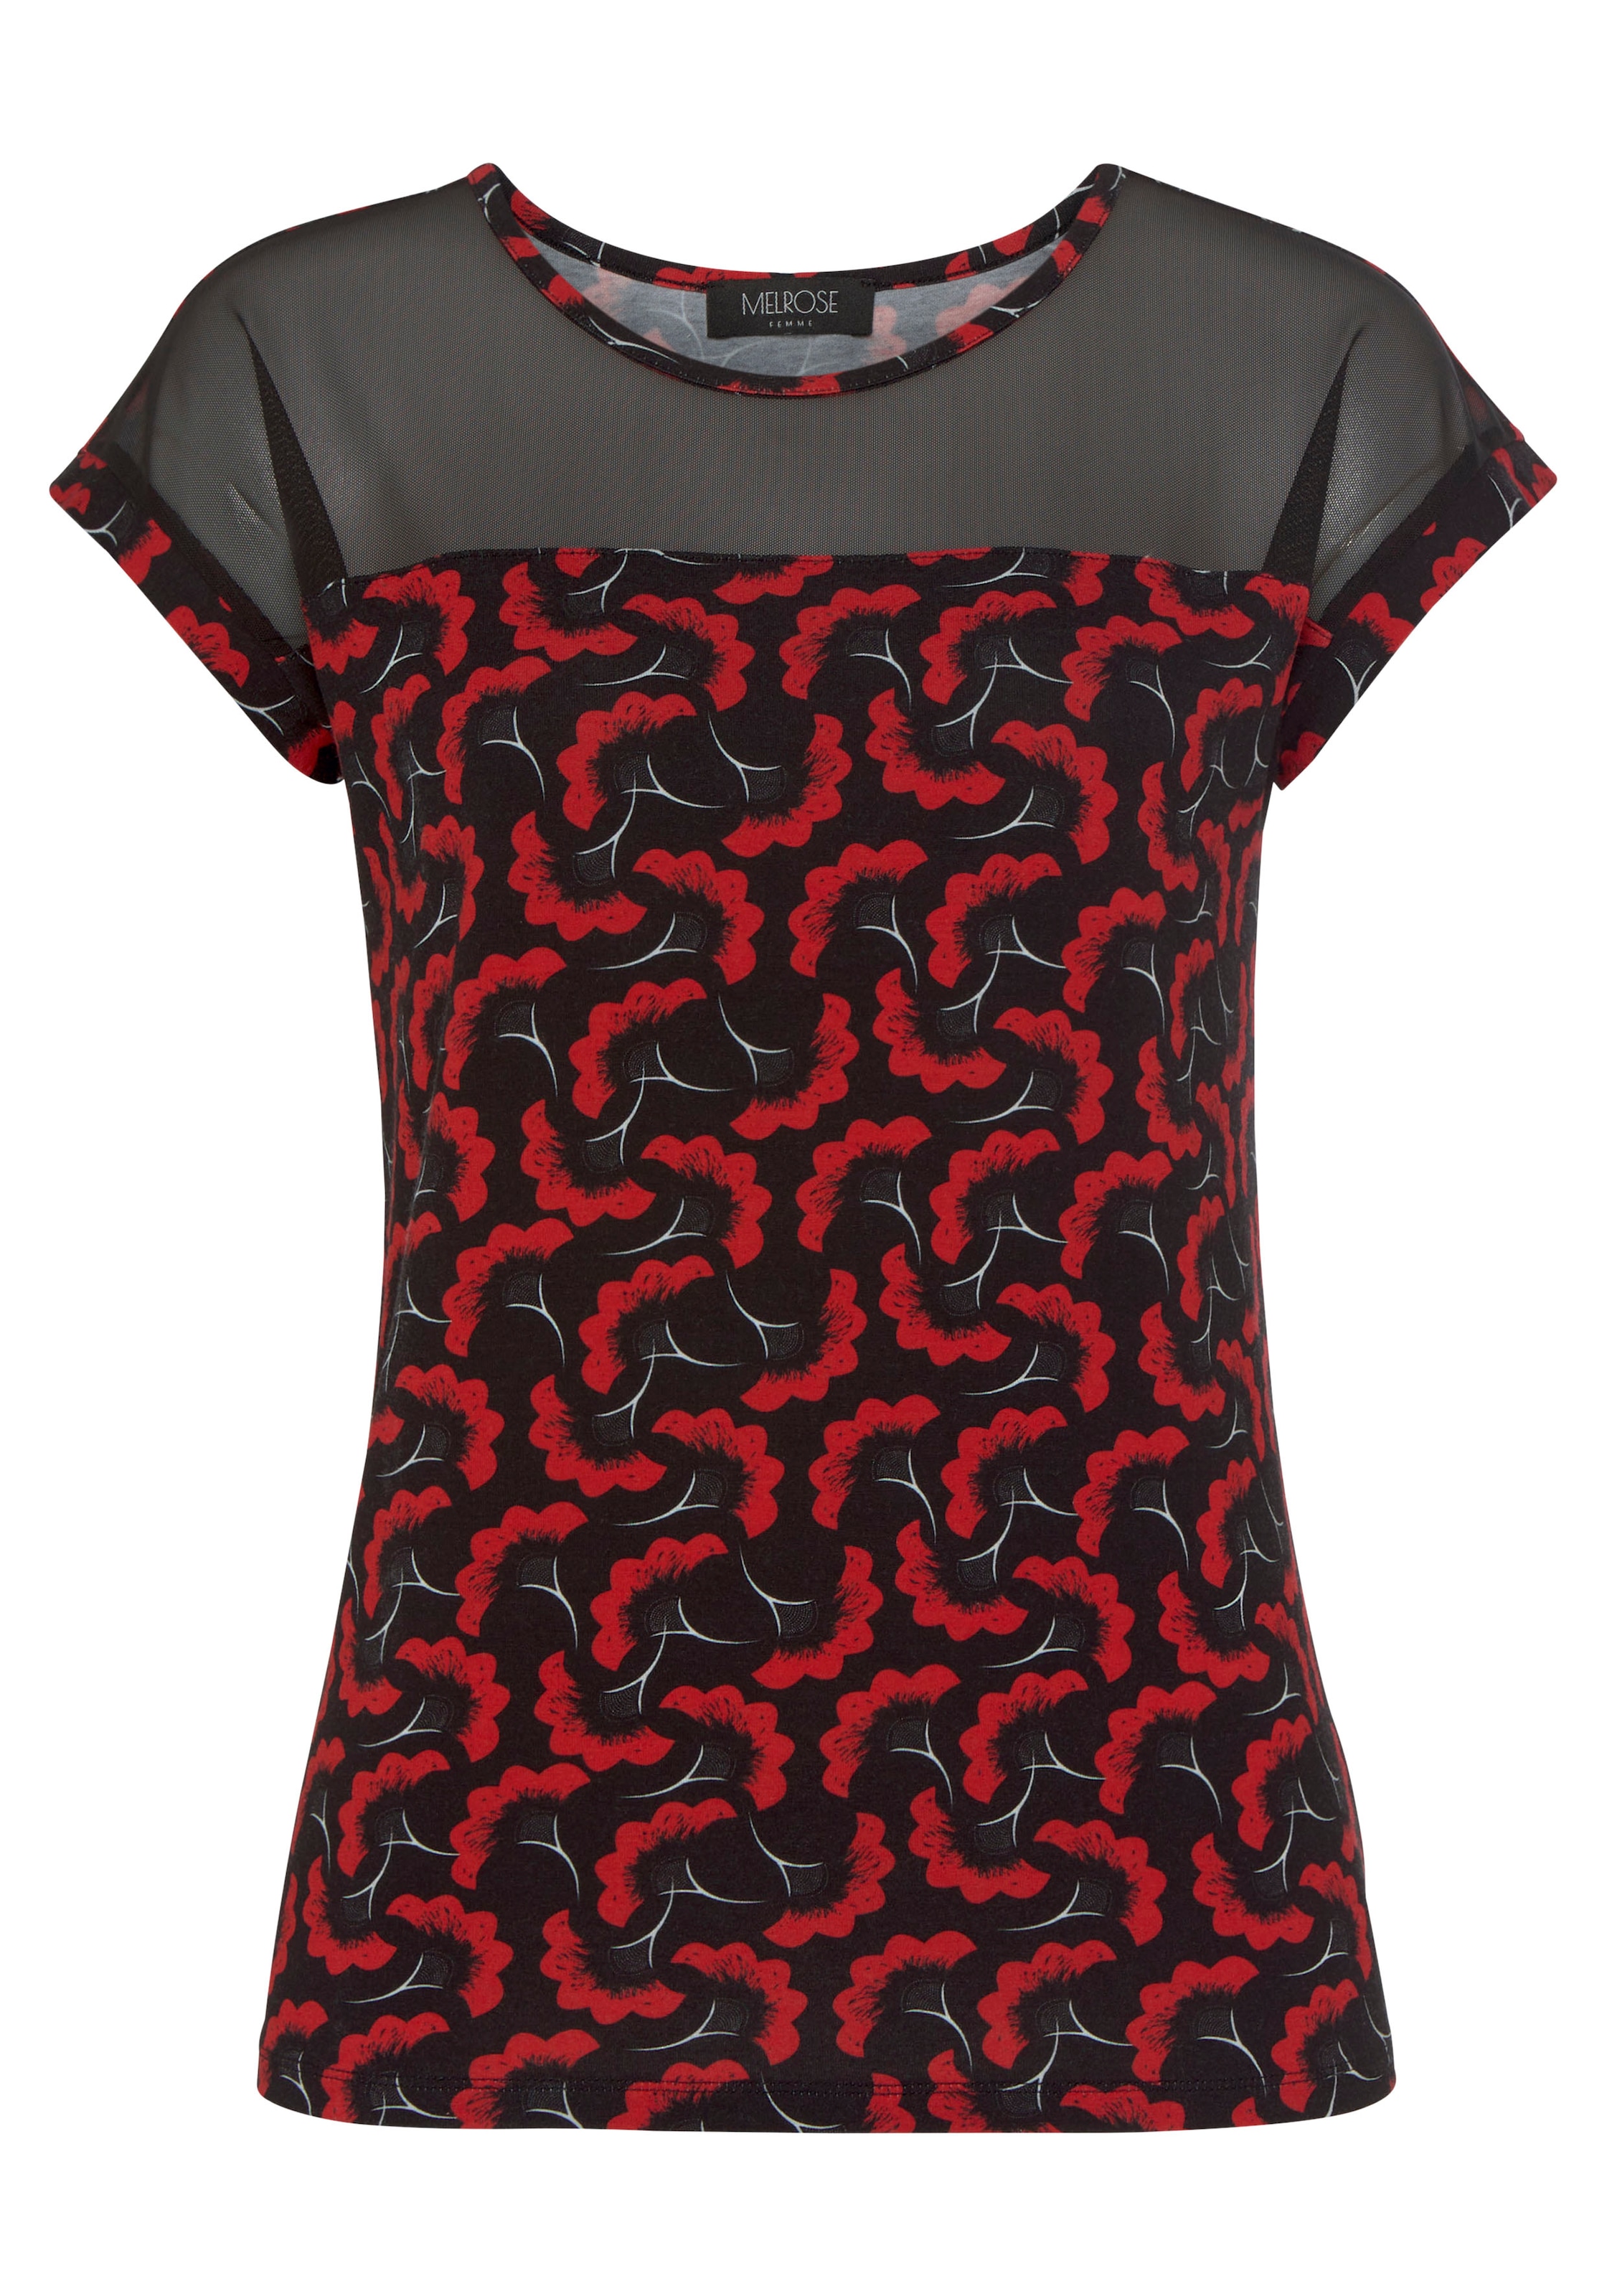 Shop Online transparentem Melrose Ausschnitt im mit bestellen OTTO T-Shirt,